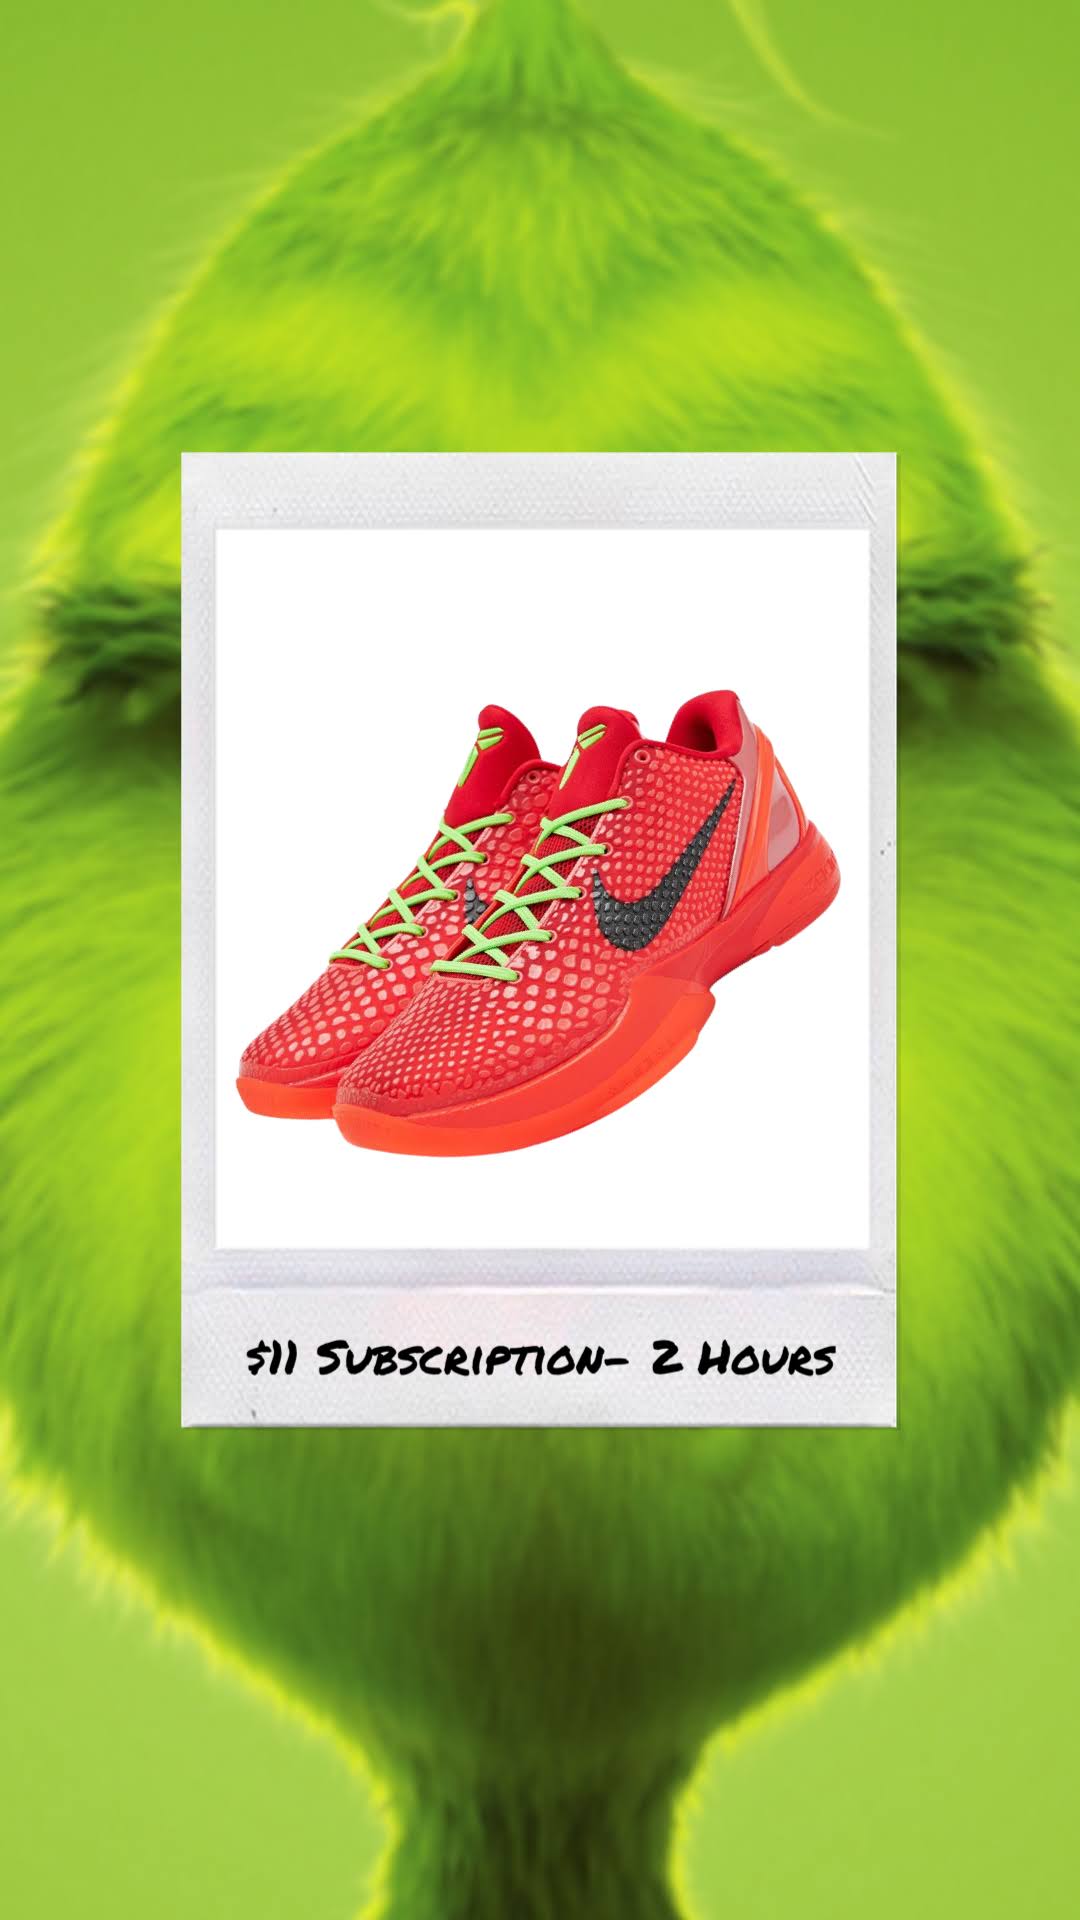 $11 Subscription - DS Nike x Kobe VI Reverse Grinch - 2 Hours